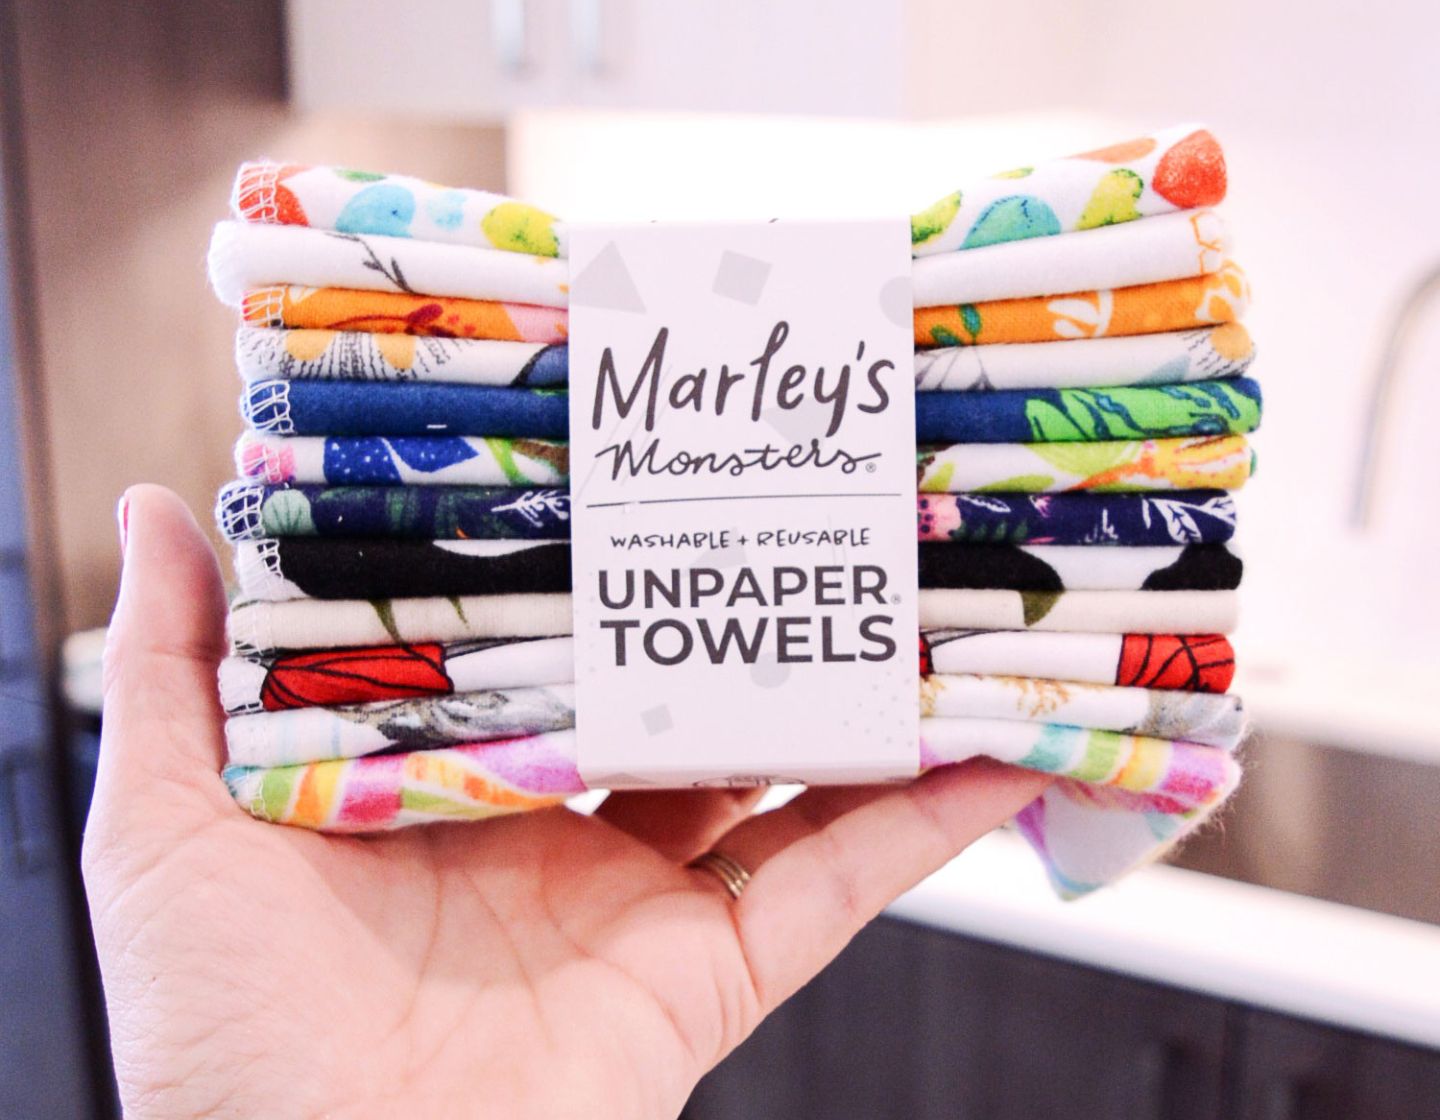 marleys-towels-1440-x-11